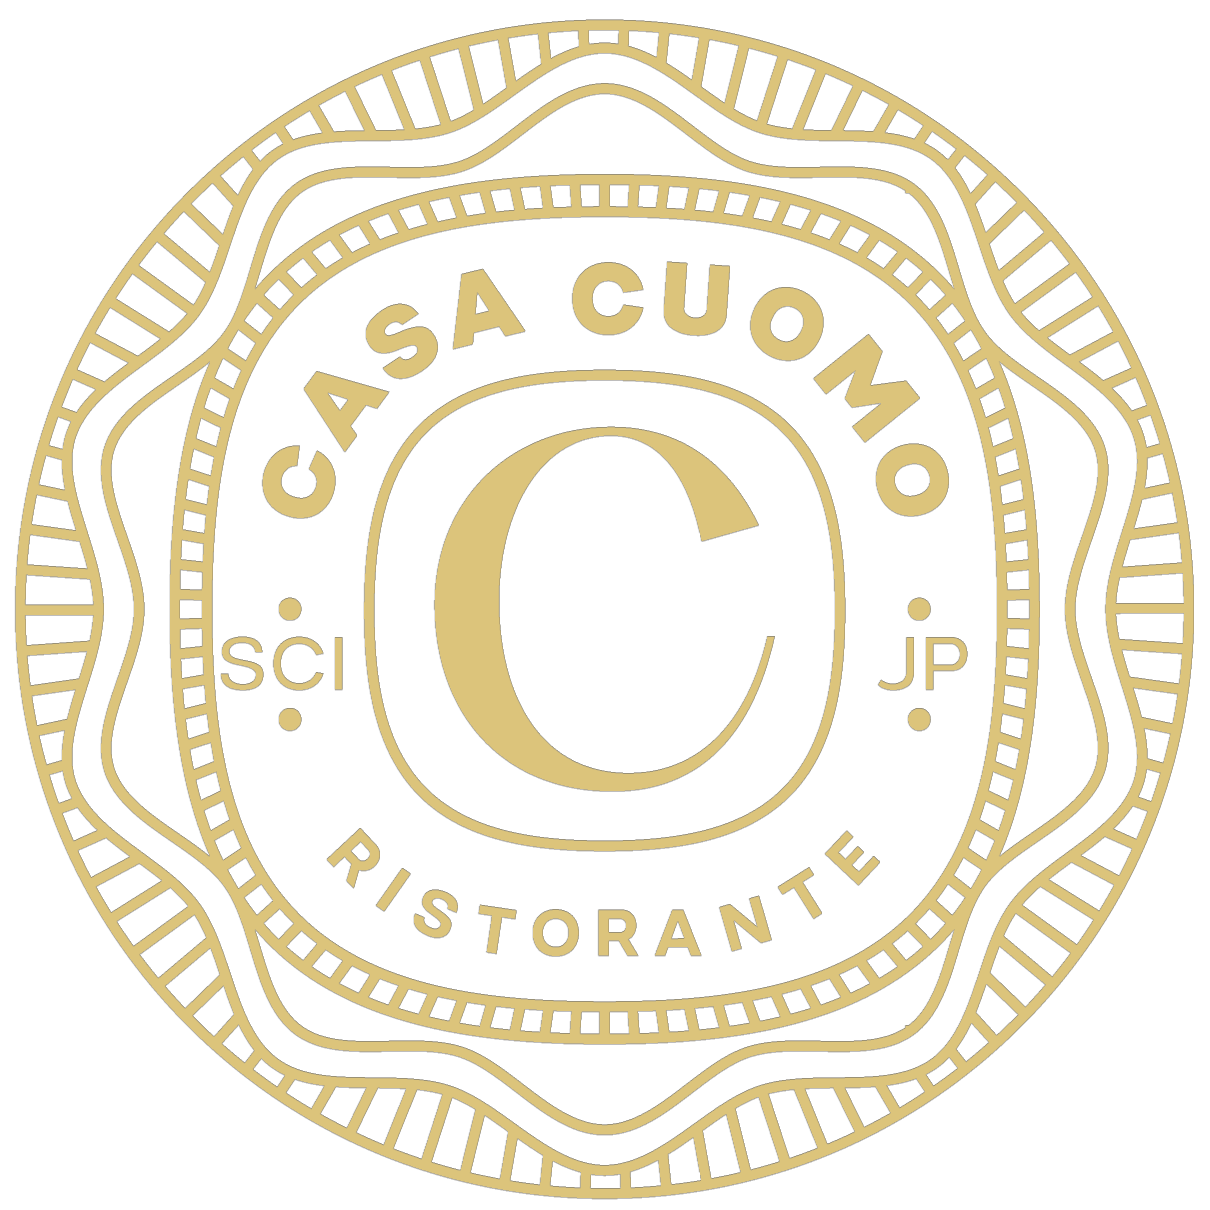 ITALIAN CUISINE produced by CASA CUOMO